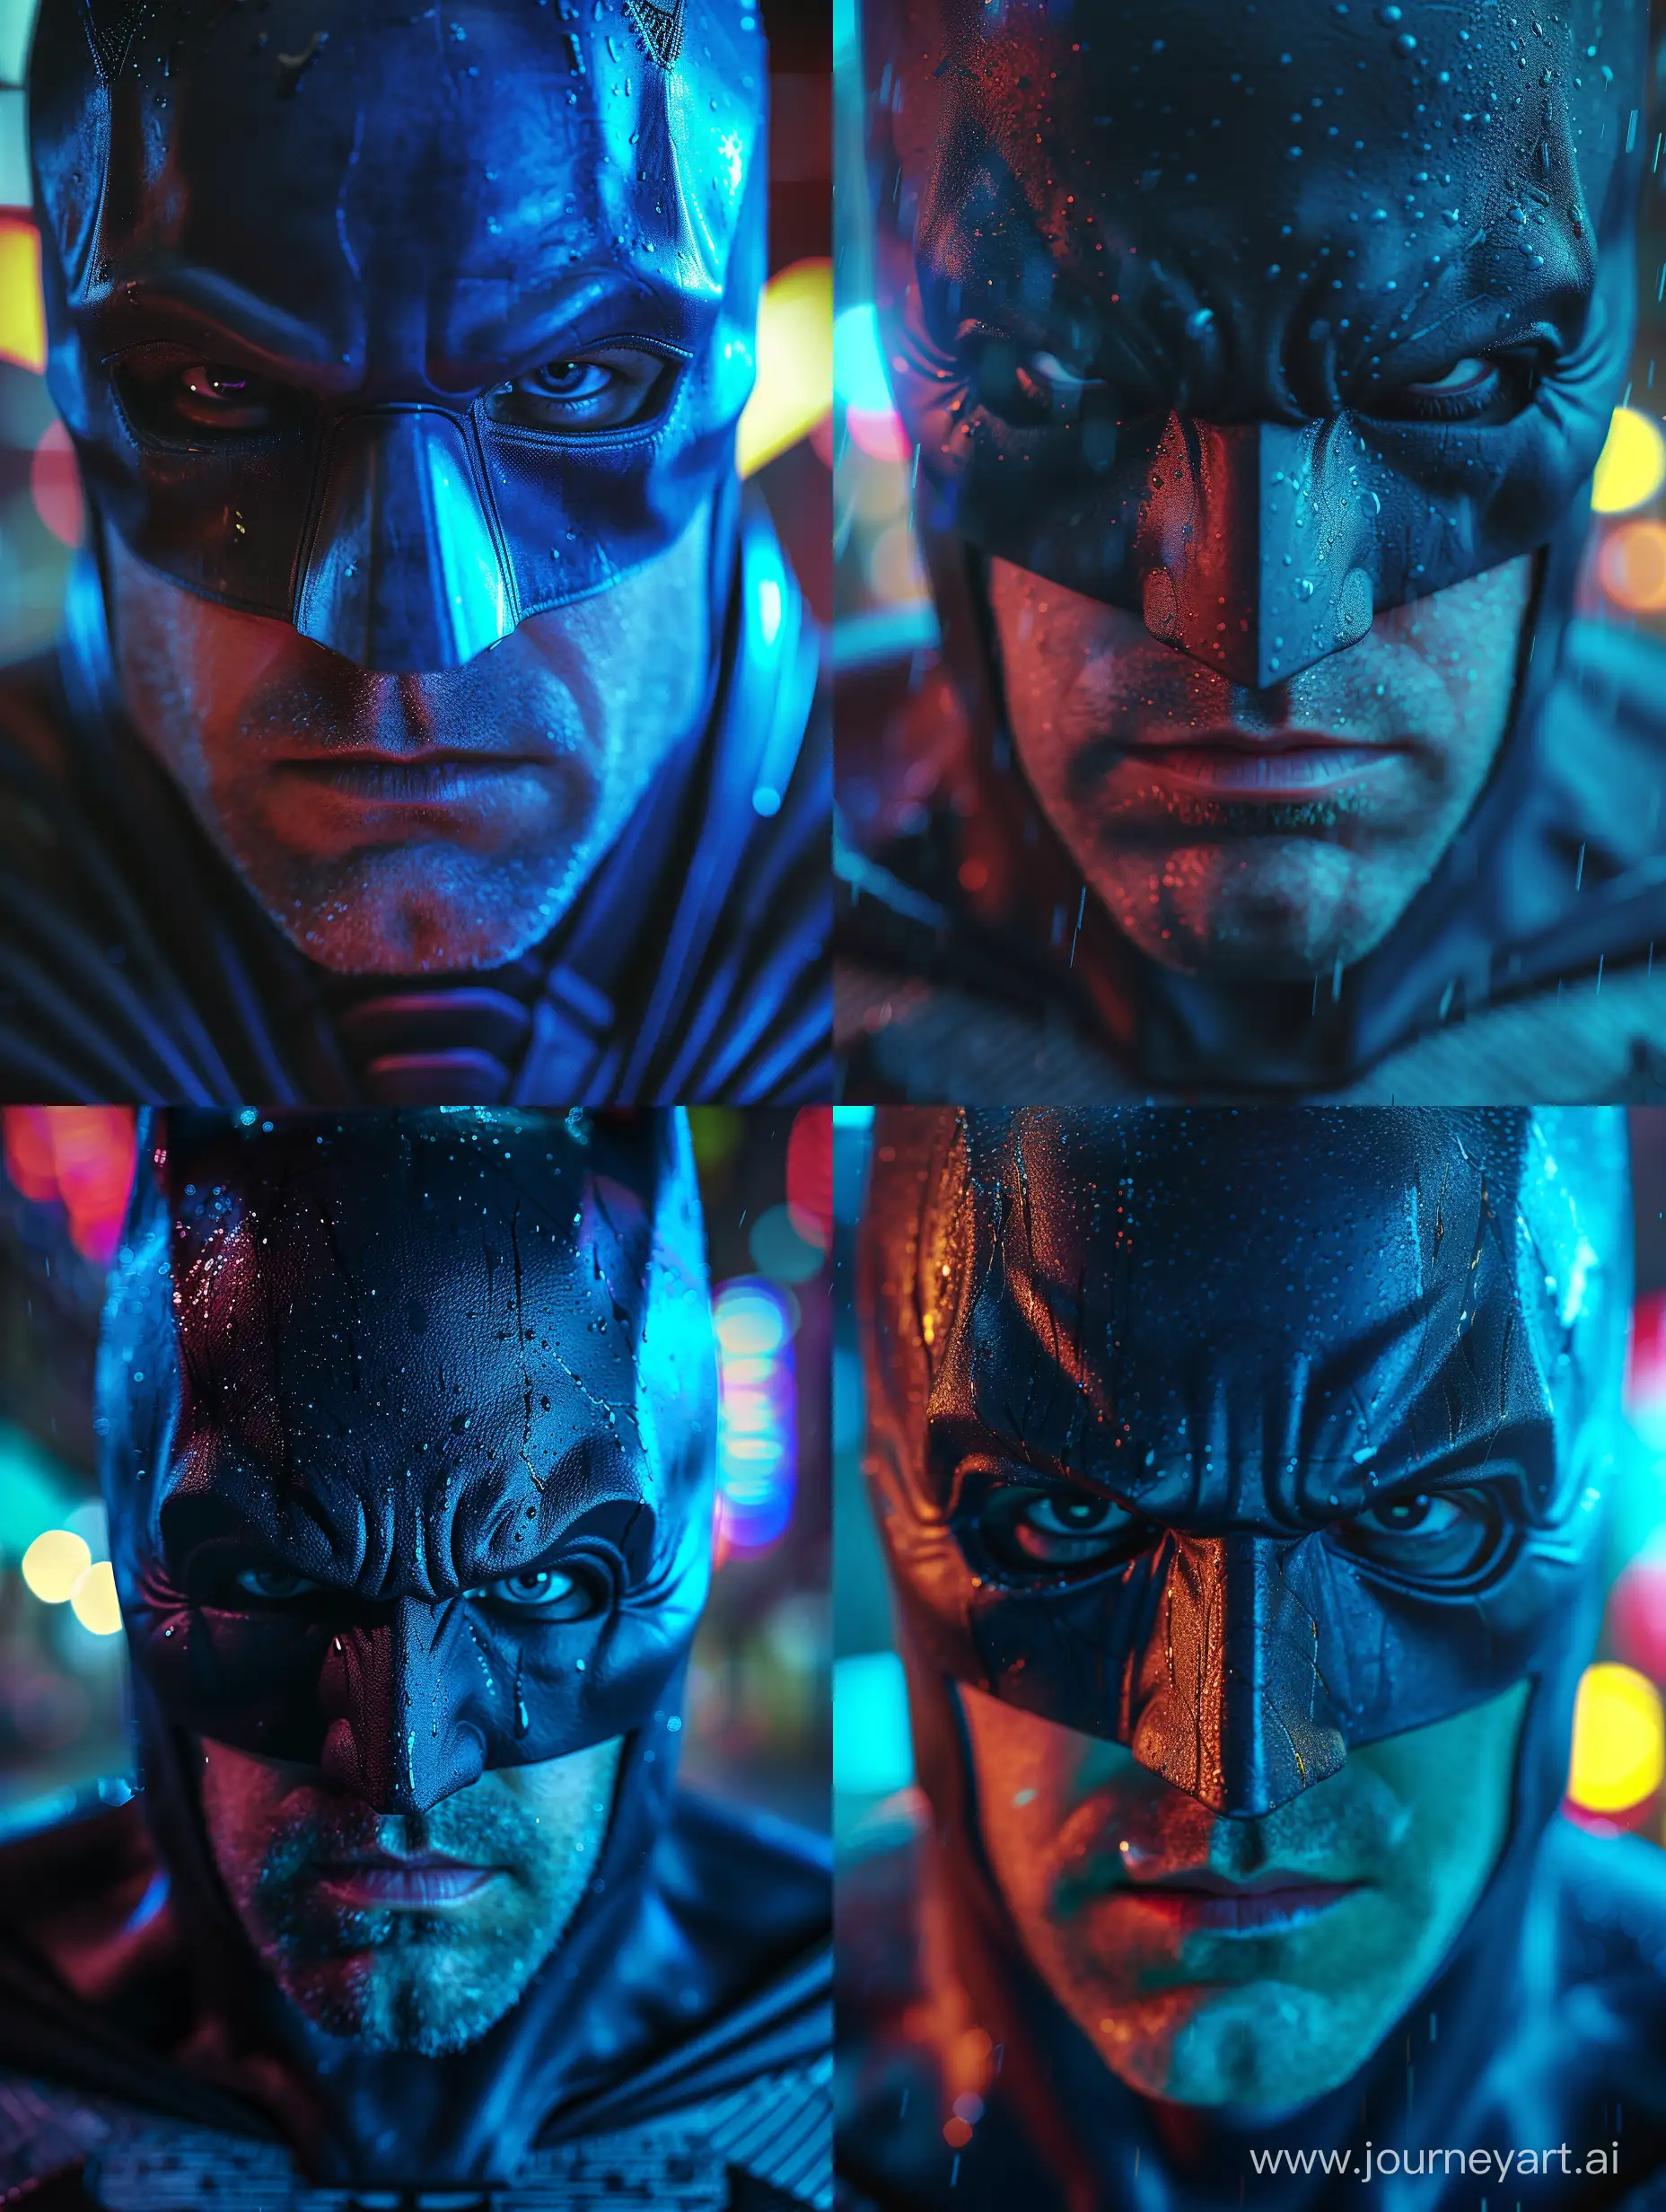 Dynamic-Closeup-Fashion-Shoot-The-Batman-in-Dramatic-Neon-Blue-Light